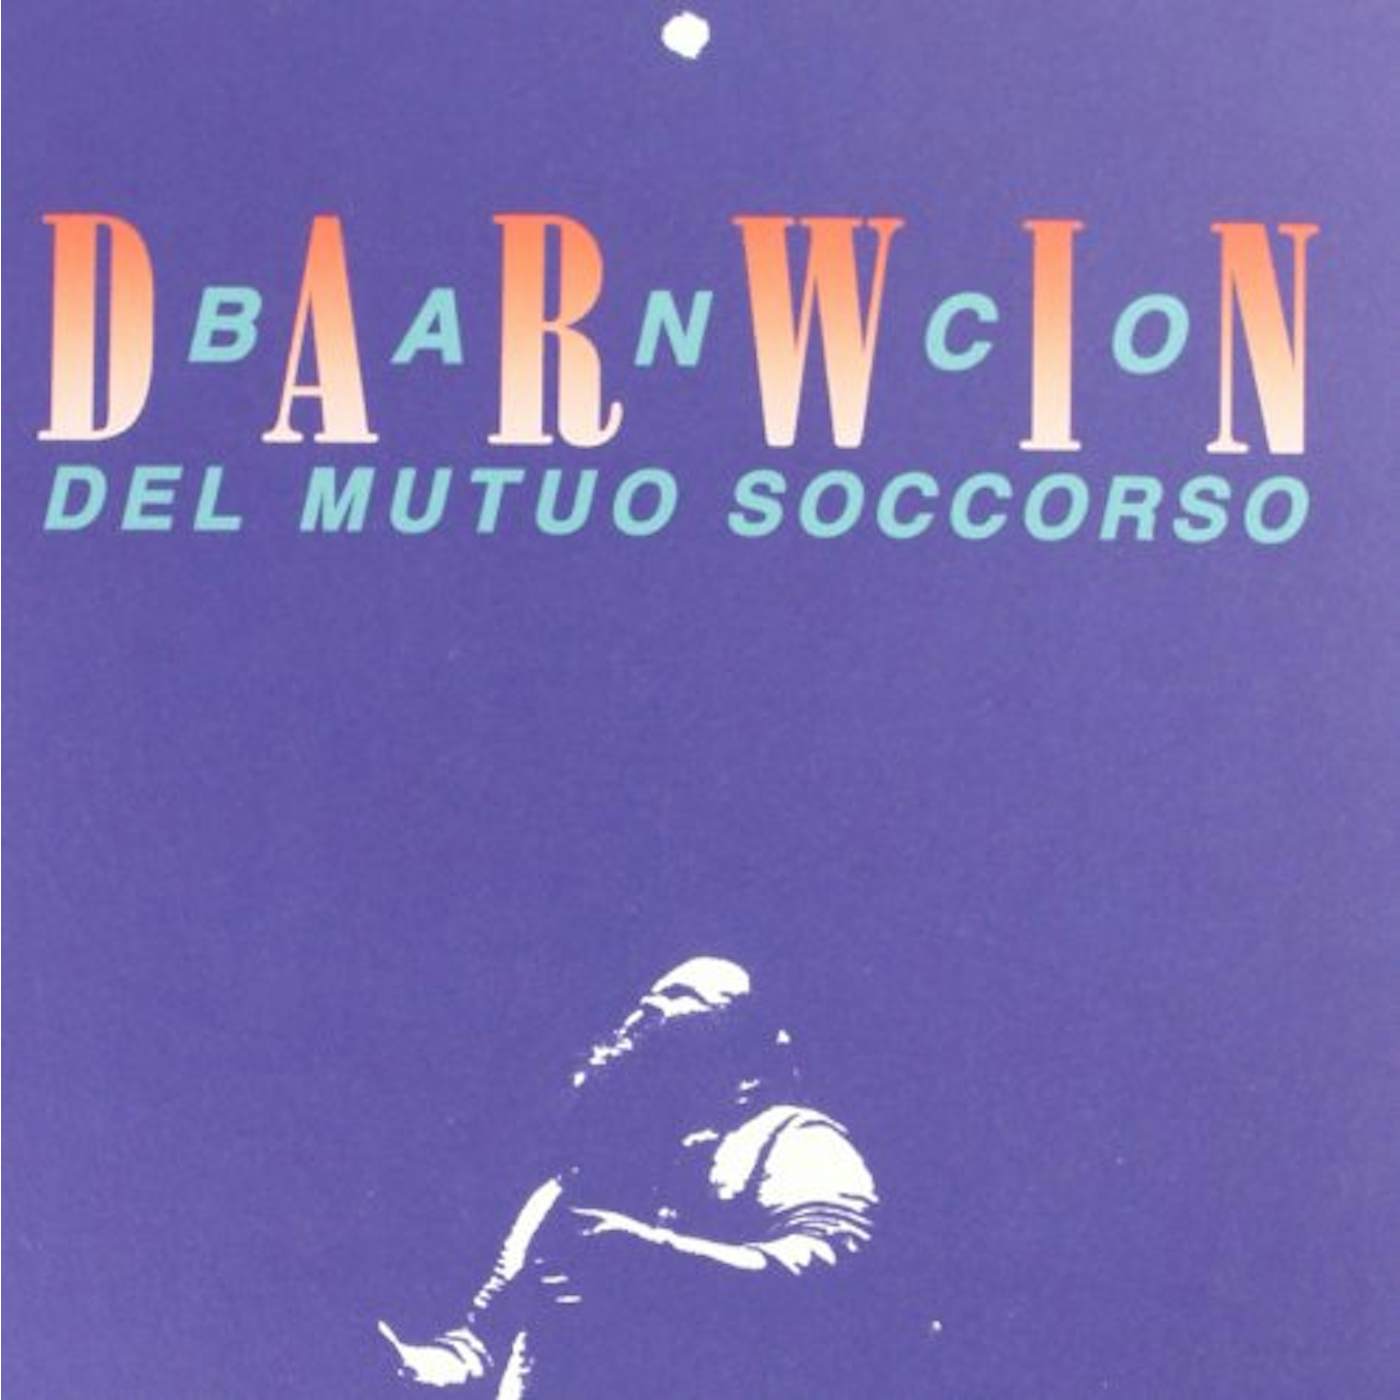 Banco Del Mutuo Soccorso DARWIN CD